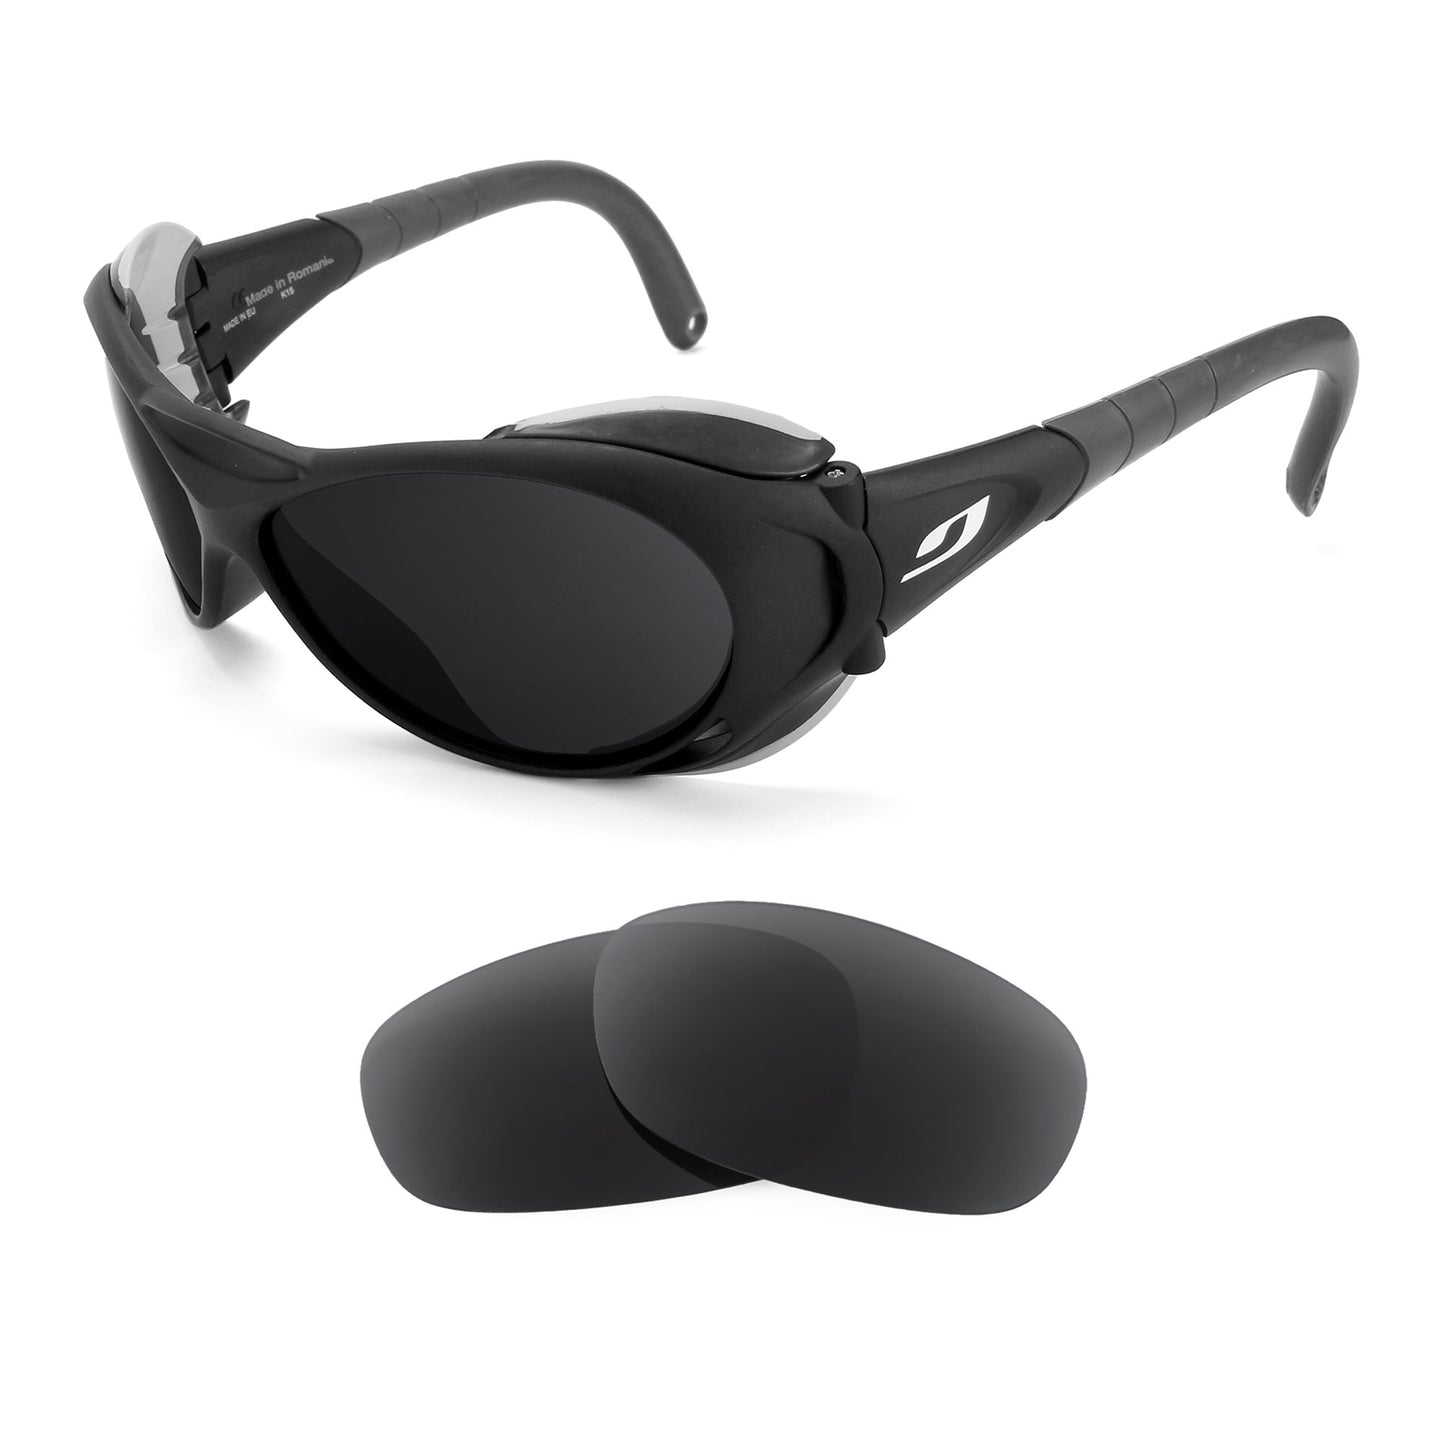 Julbo Explorer XL sunglasses with replacement lenses